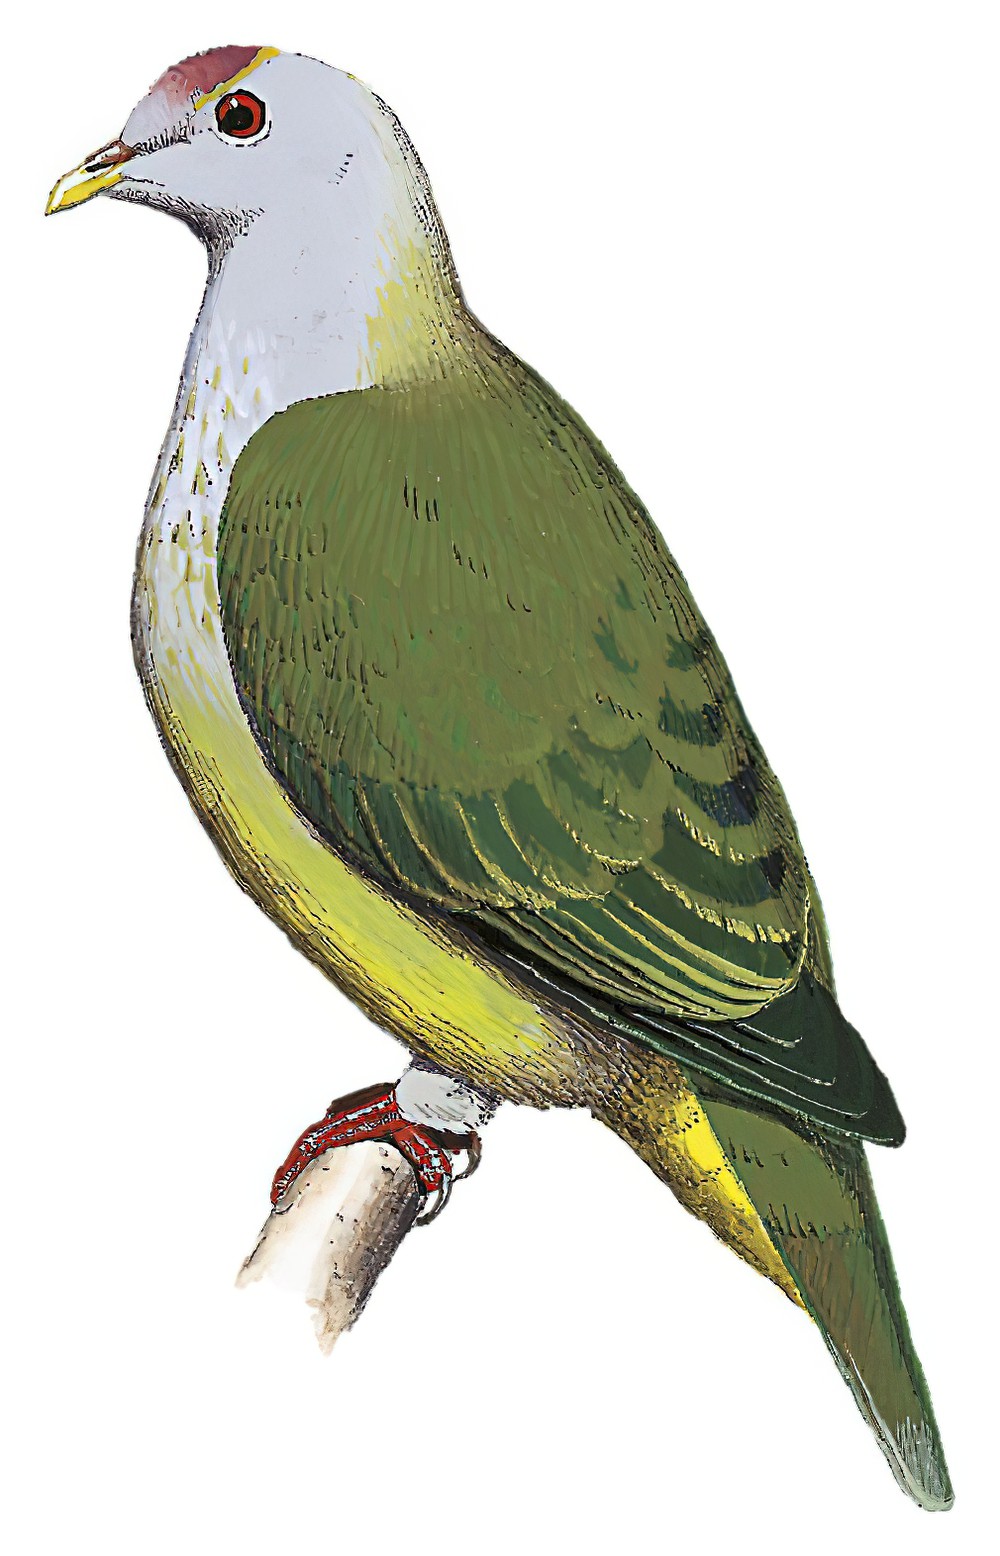 Atoll Fruit-Dove / Ptilinopus coralensis